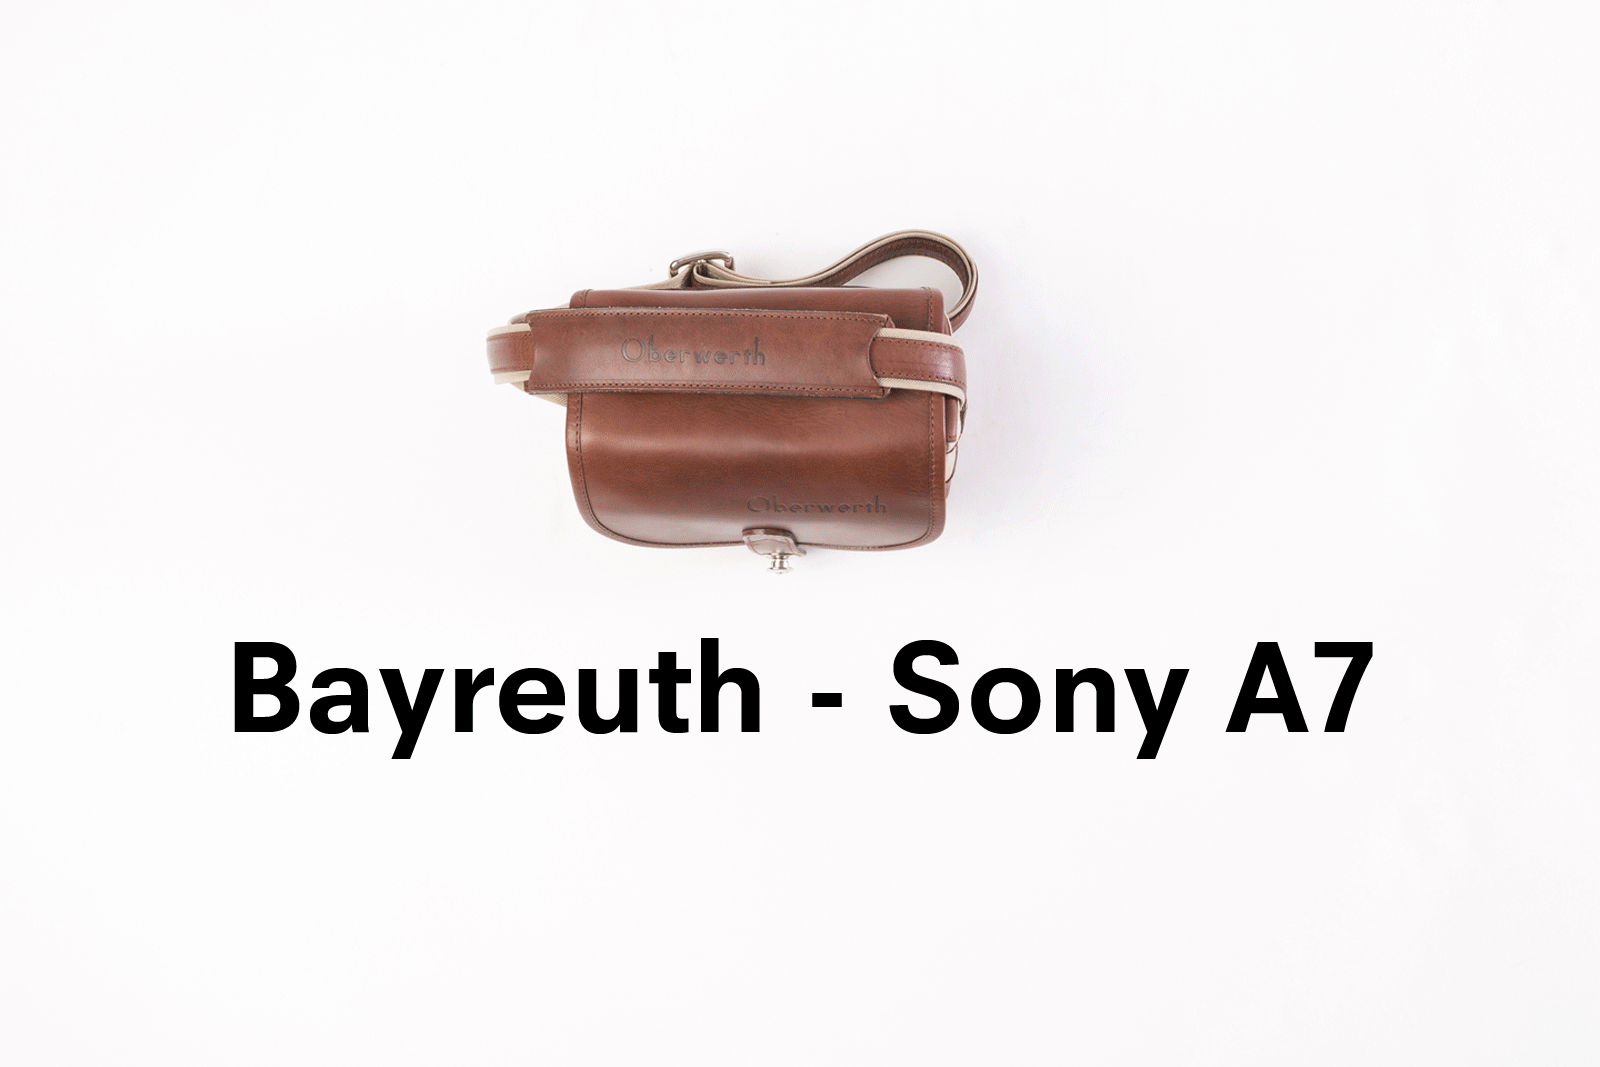 Camera bag BAYREUTH